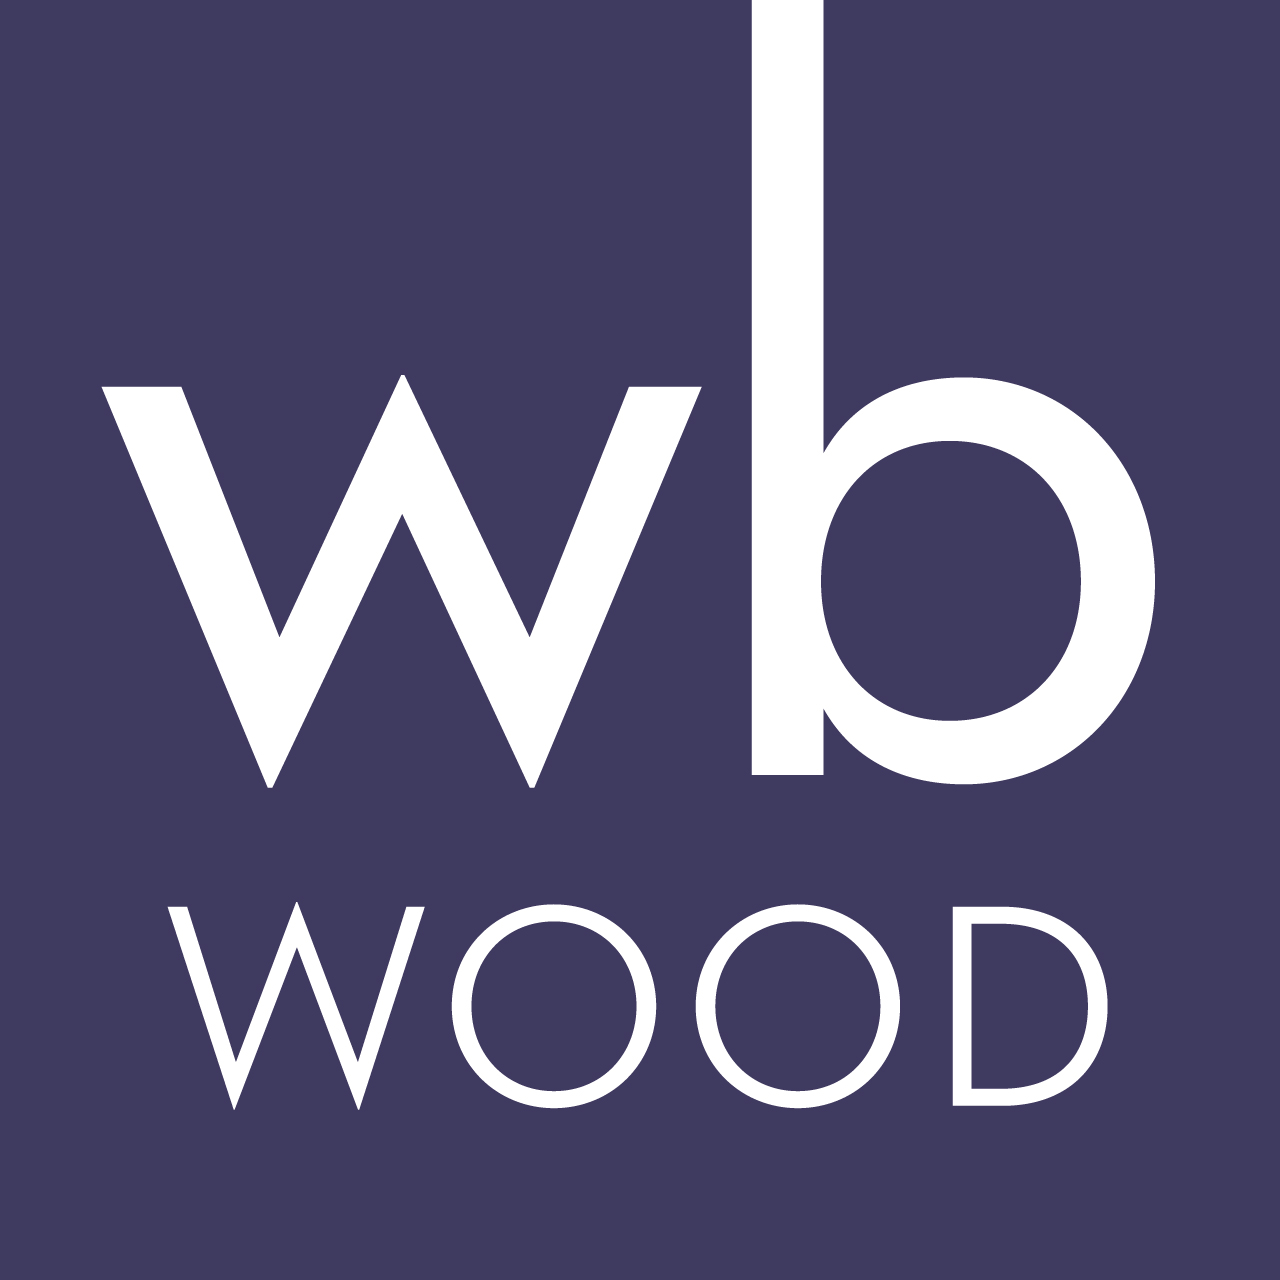 WB WOOD logo